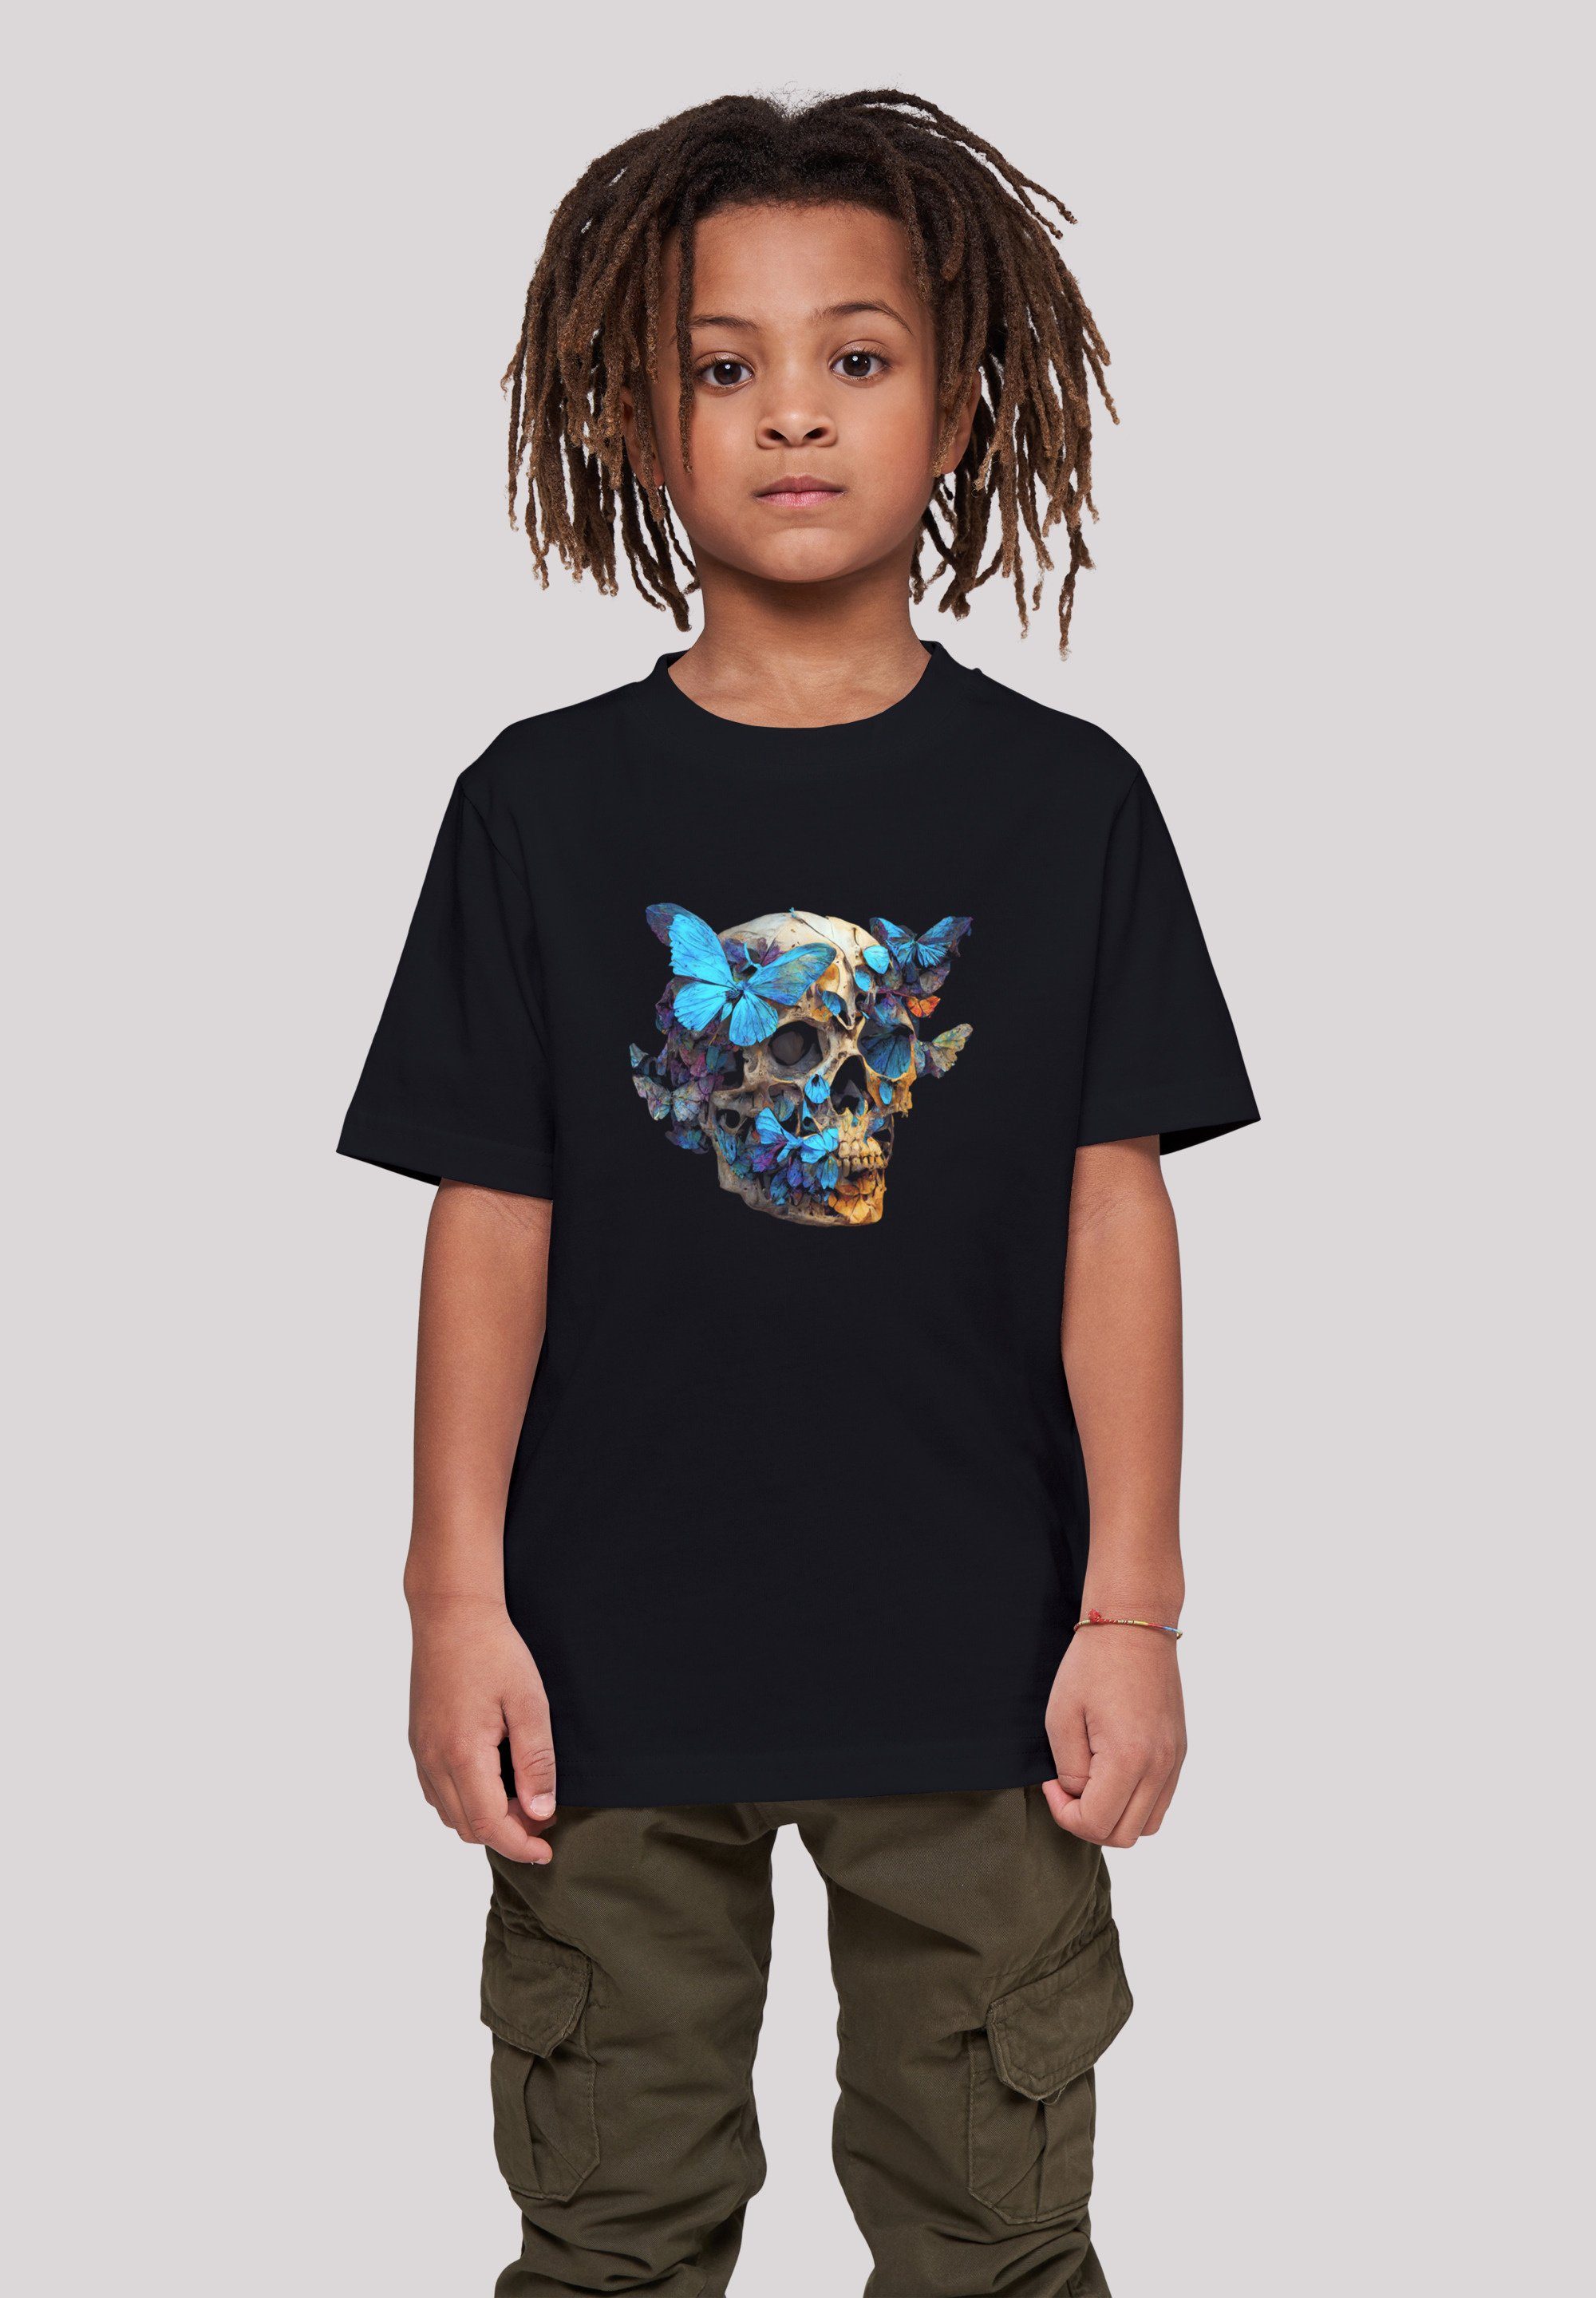 F4NT4STIC T-Shirt Schmetterling Skull TEE UNISEX Print schwarz